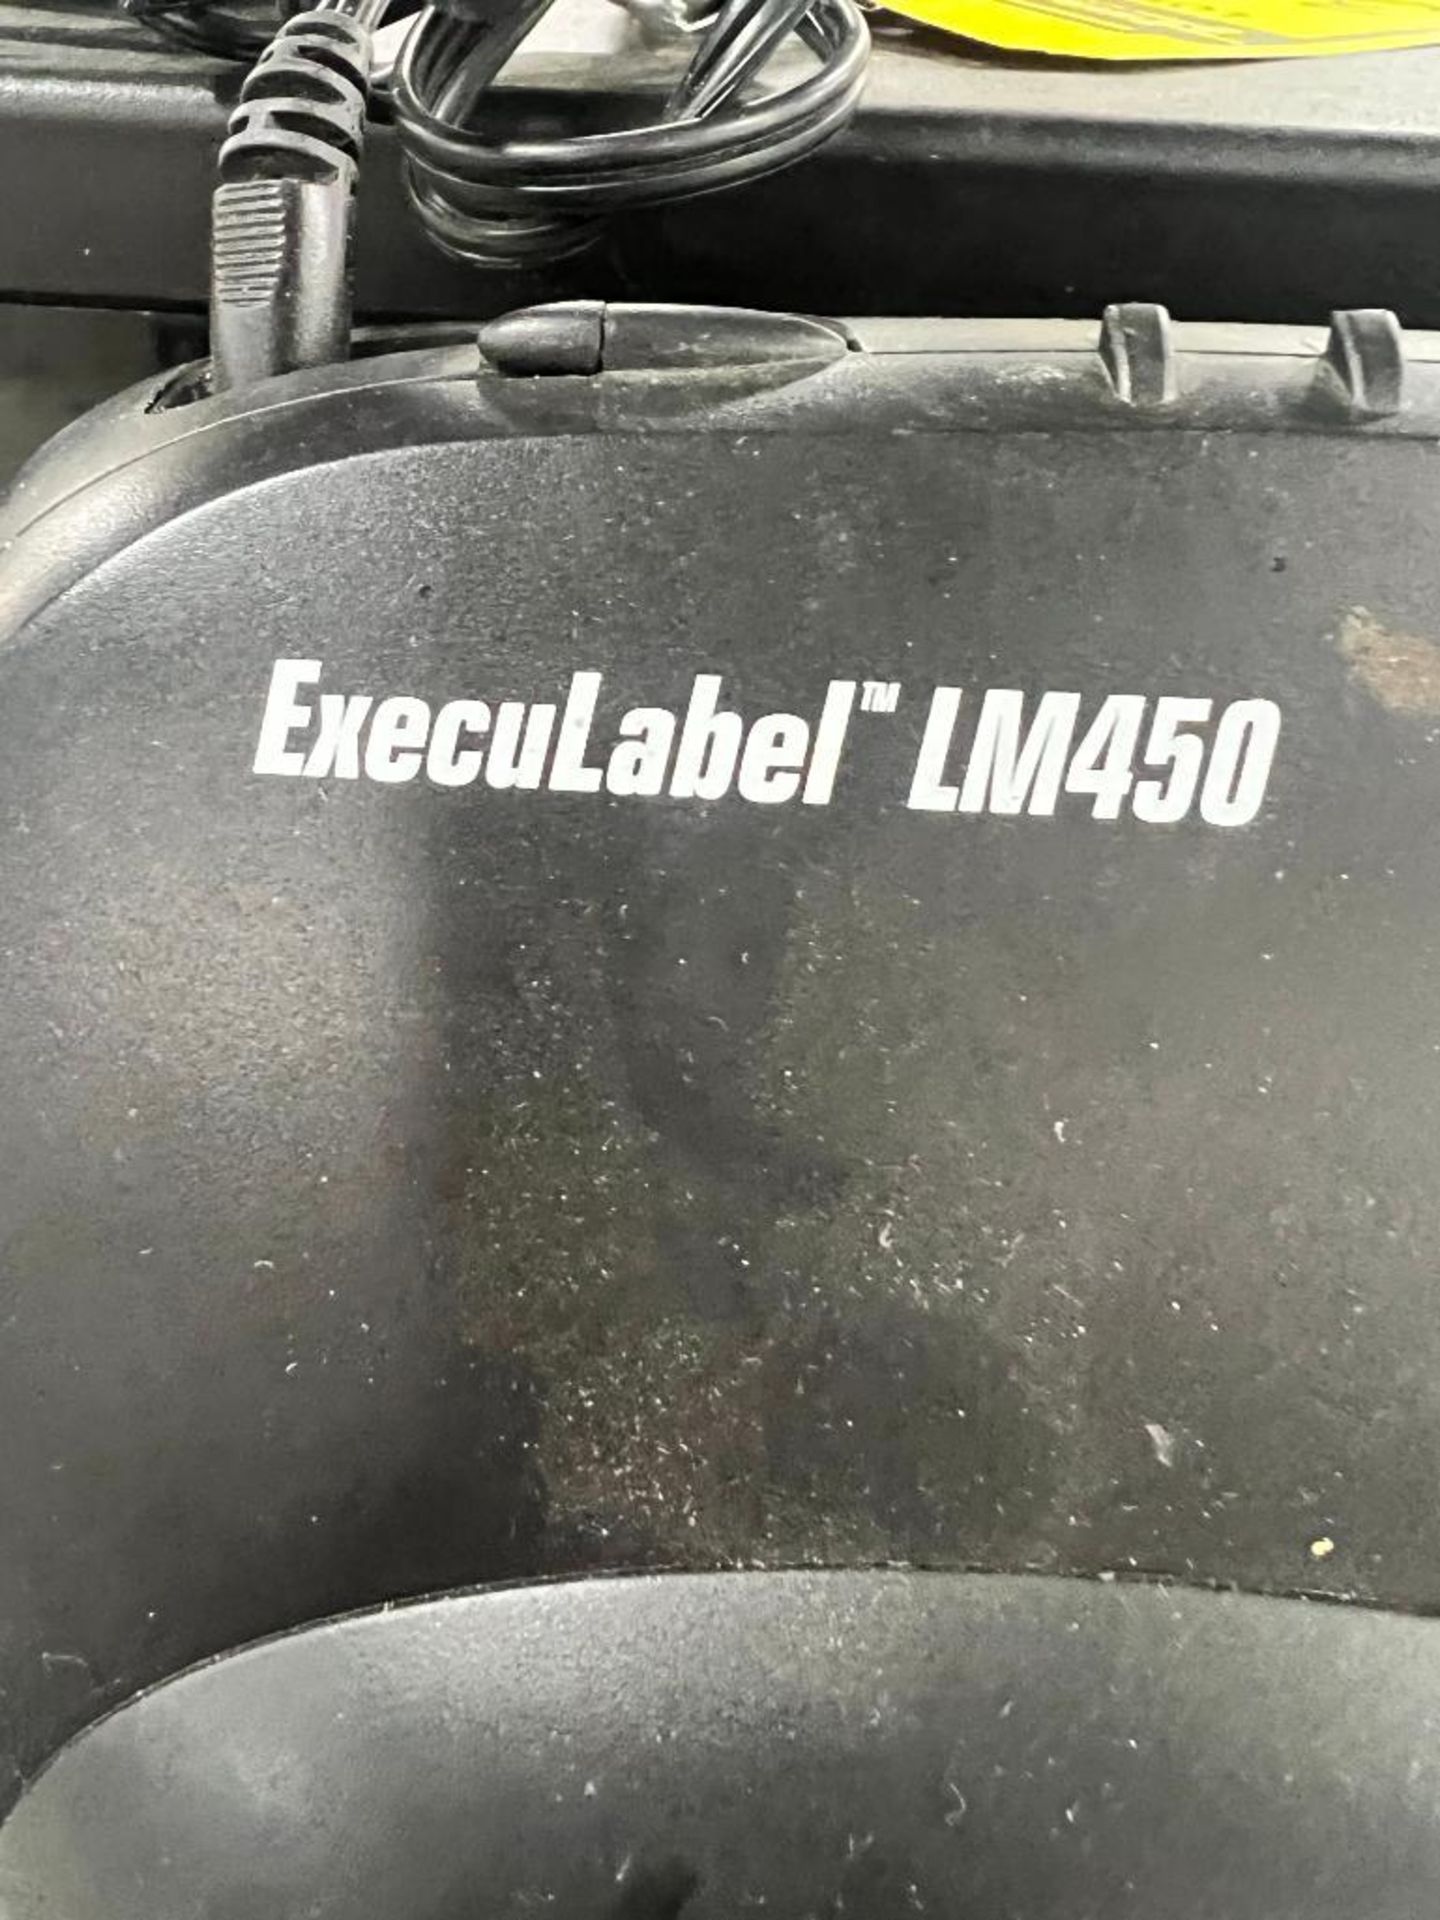 Dymo Execulabel Maker LM450 Printer - Image 3 of 3